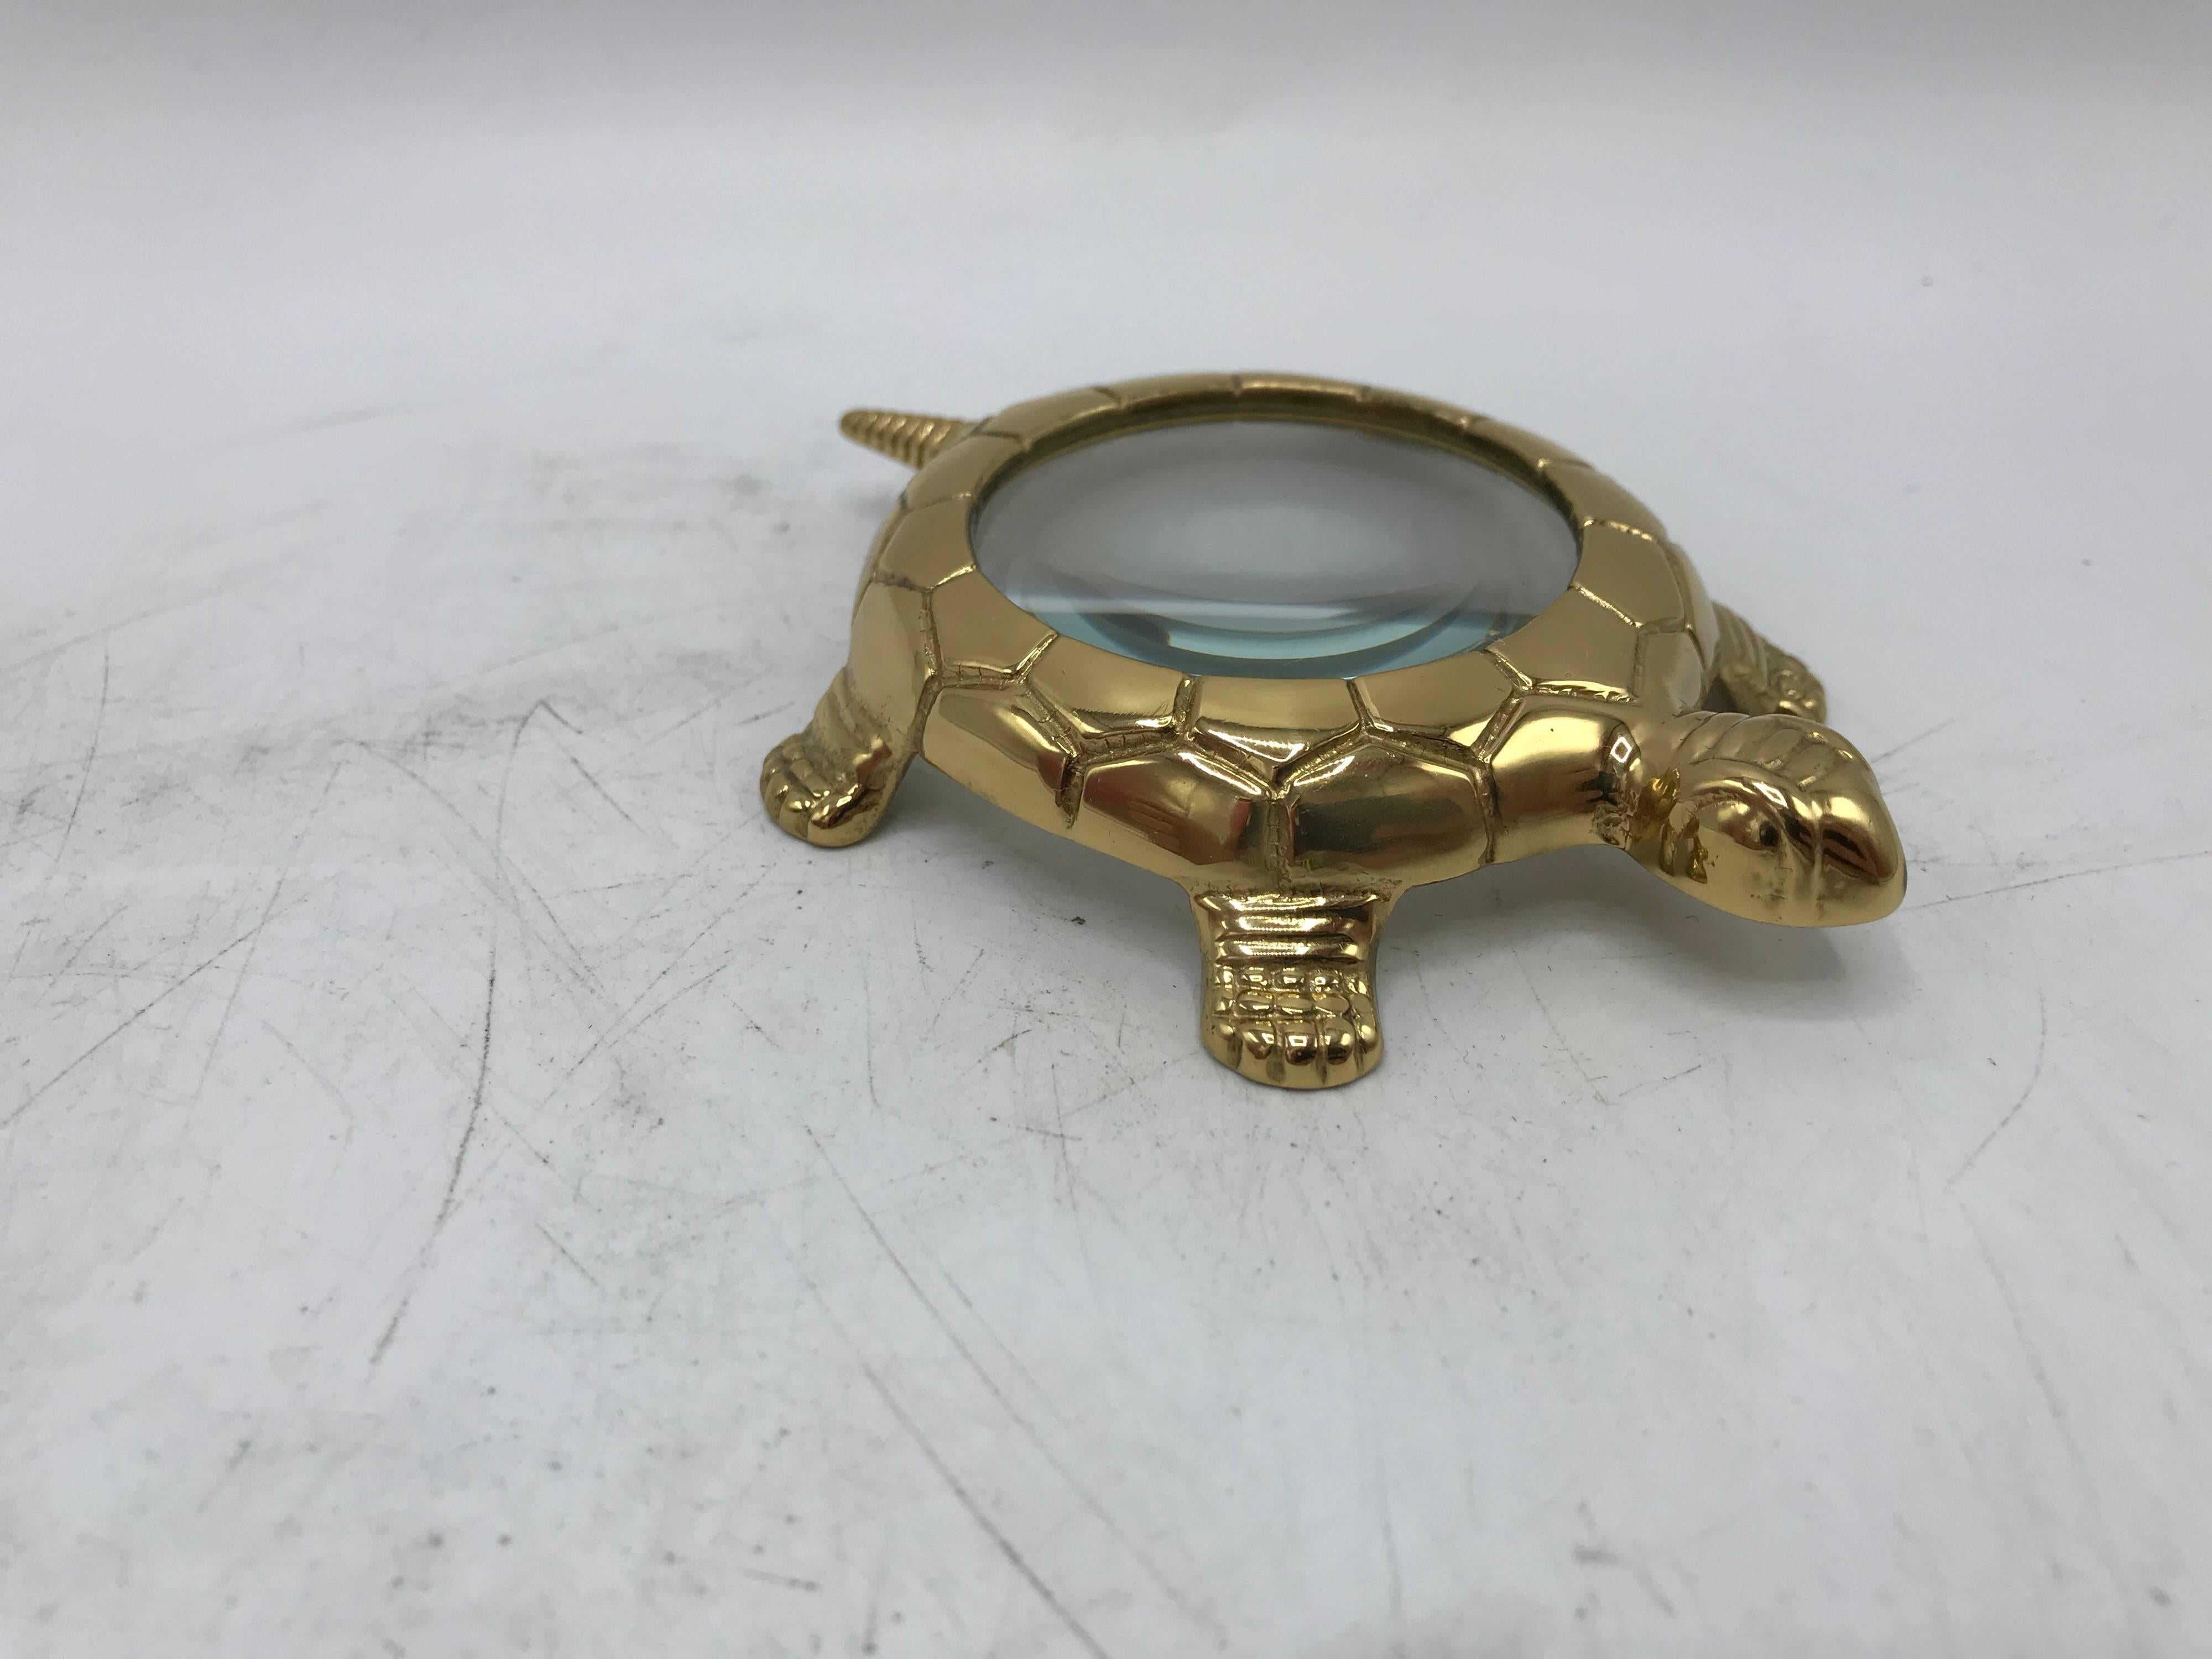 brass turtle paperweight